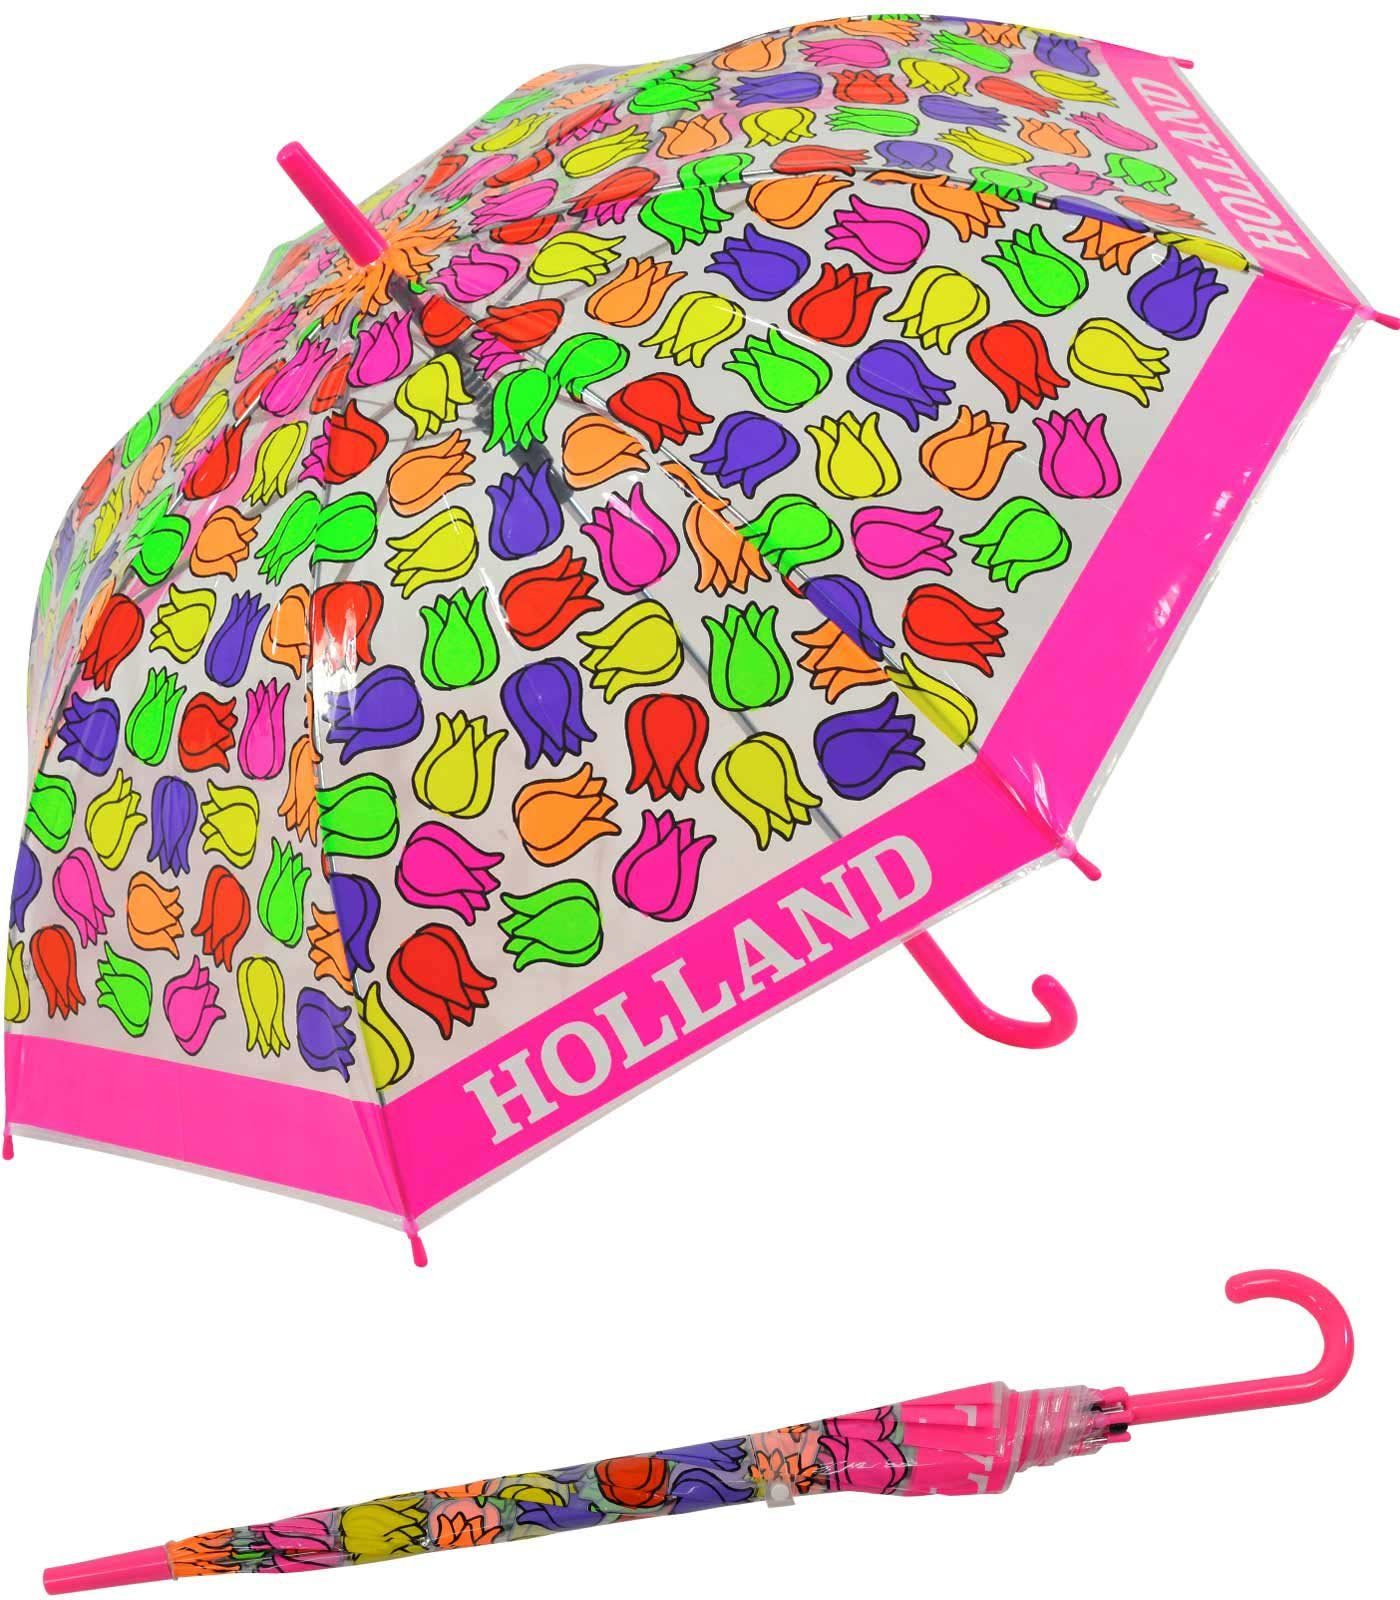 Toller Verkauf Impliva Langregenschirm Falconetti Kinderschirm bunt pink - Tulpen, transparent durchsichtig